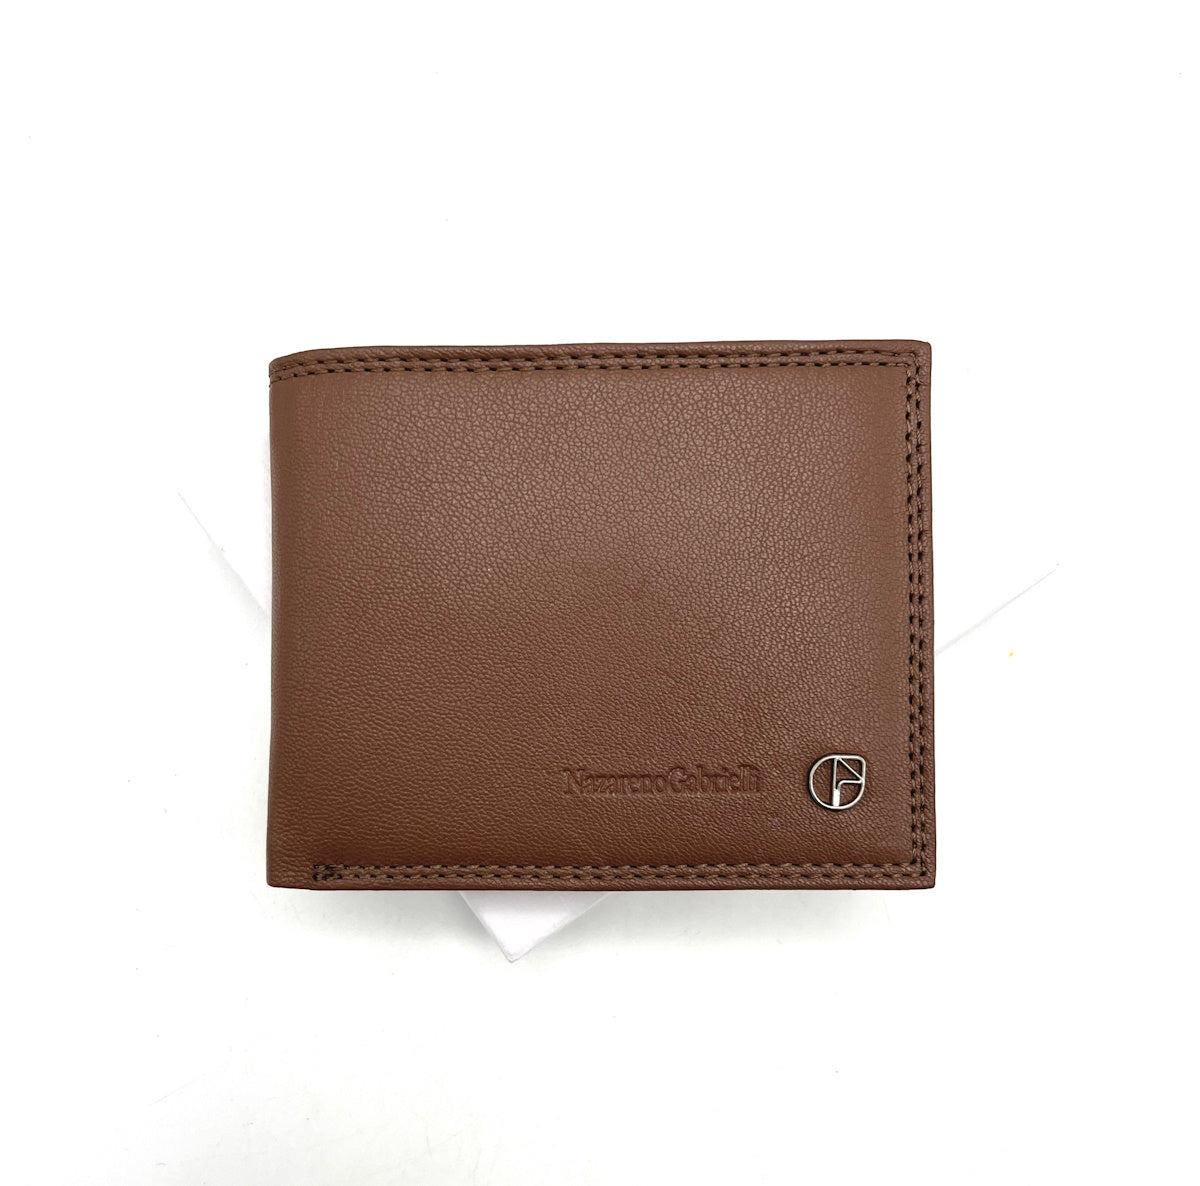 Genuine leather wallet, N.Gabrielli, art. PDK391-9